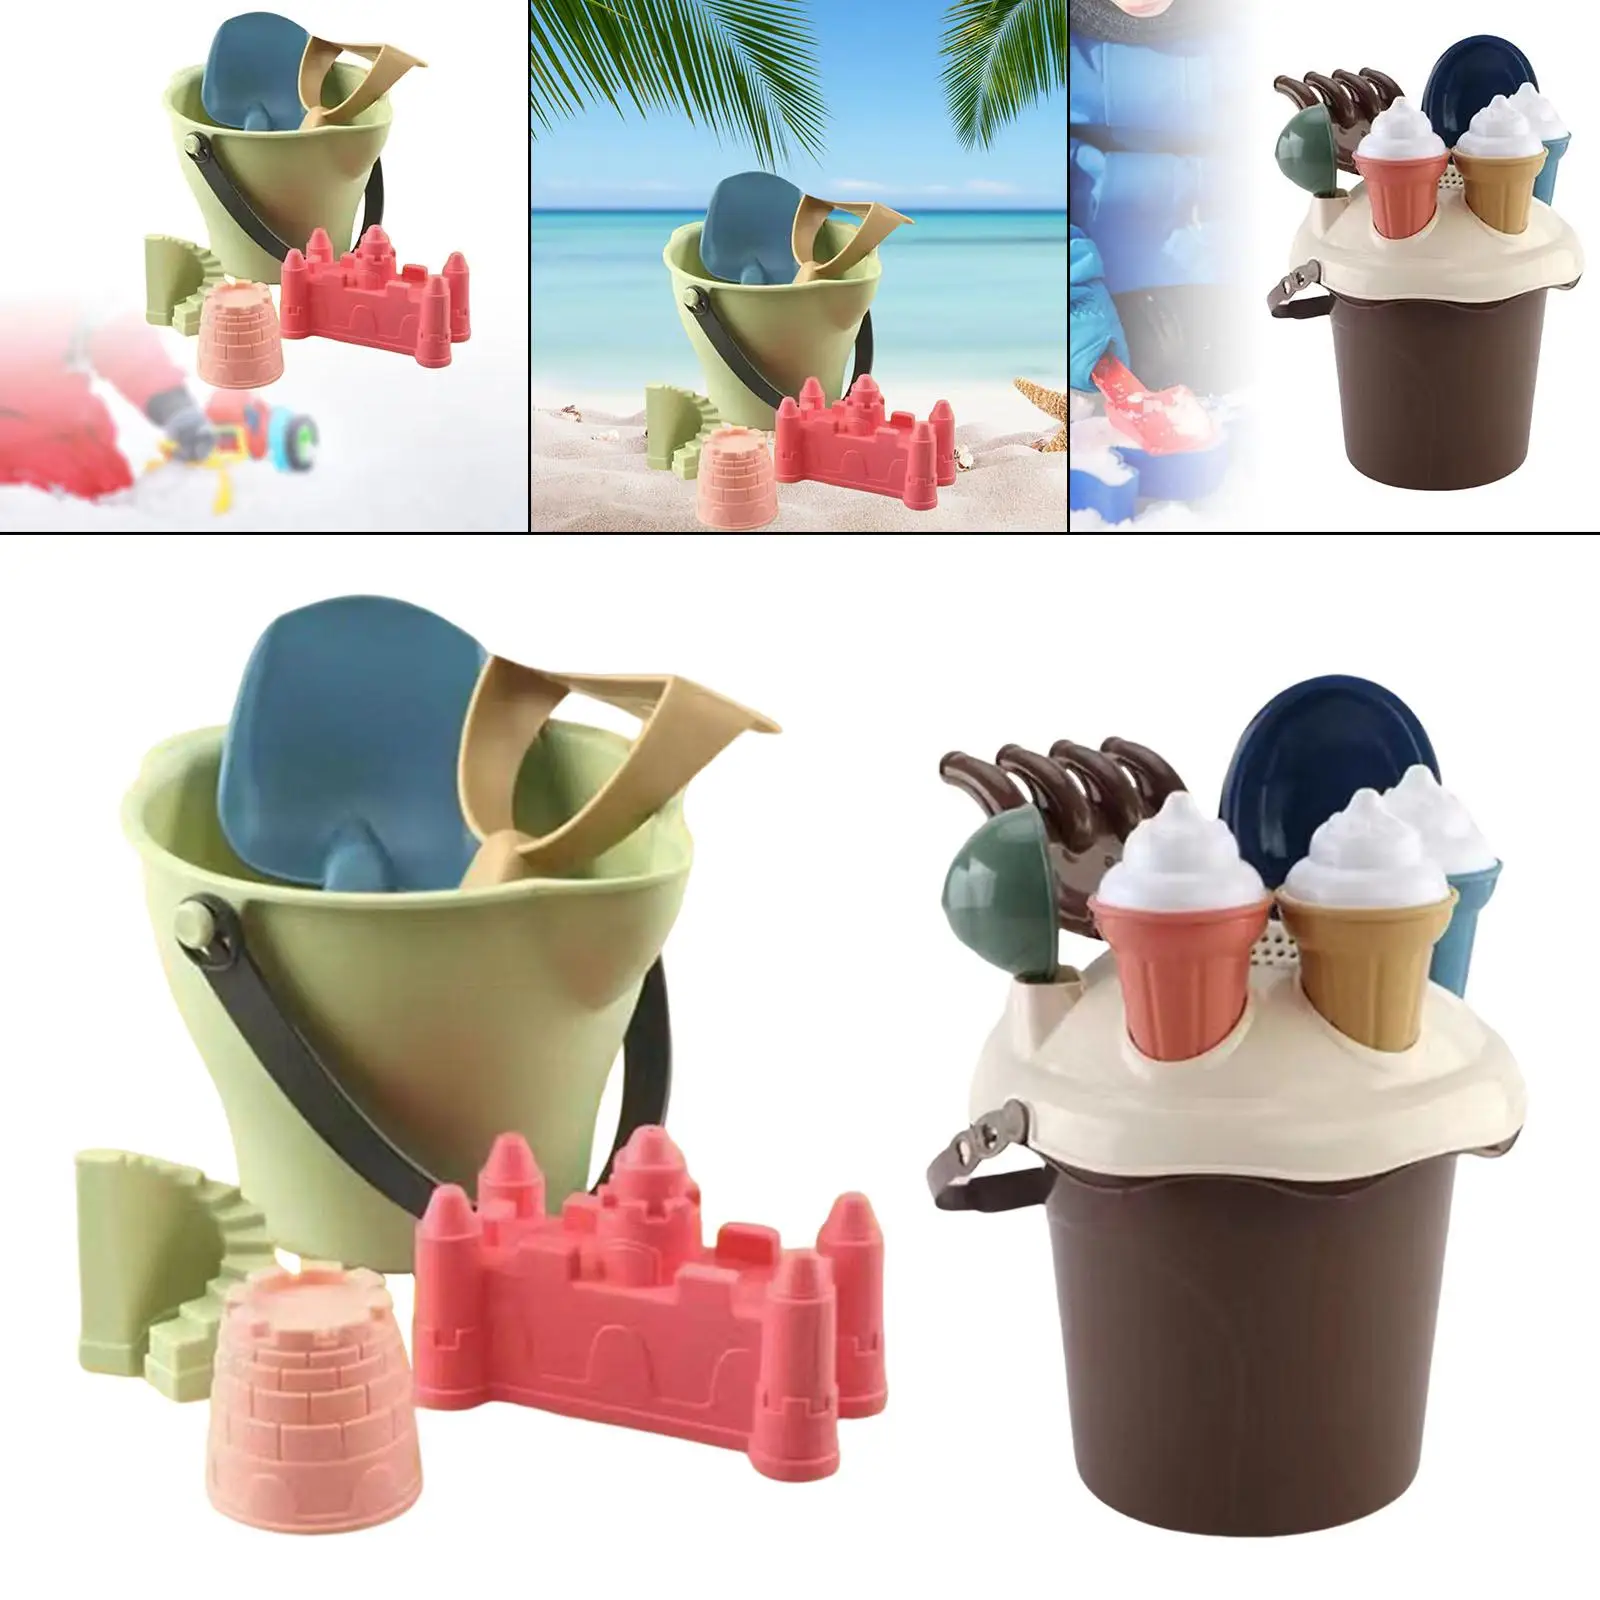 Travel Sand Toys Castle,Outdoor Indoor Play Gift,Beach Tool,Sandbox Toys